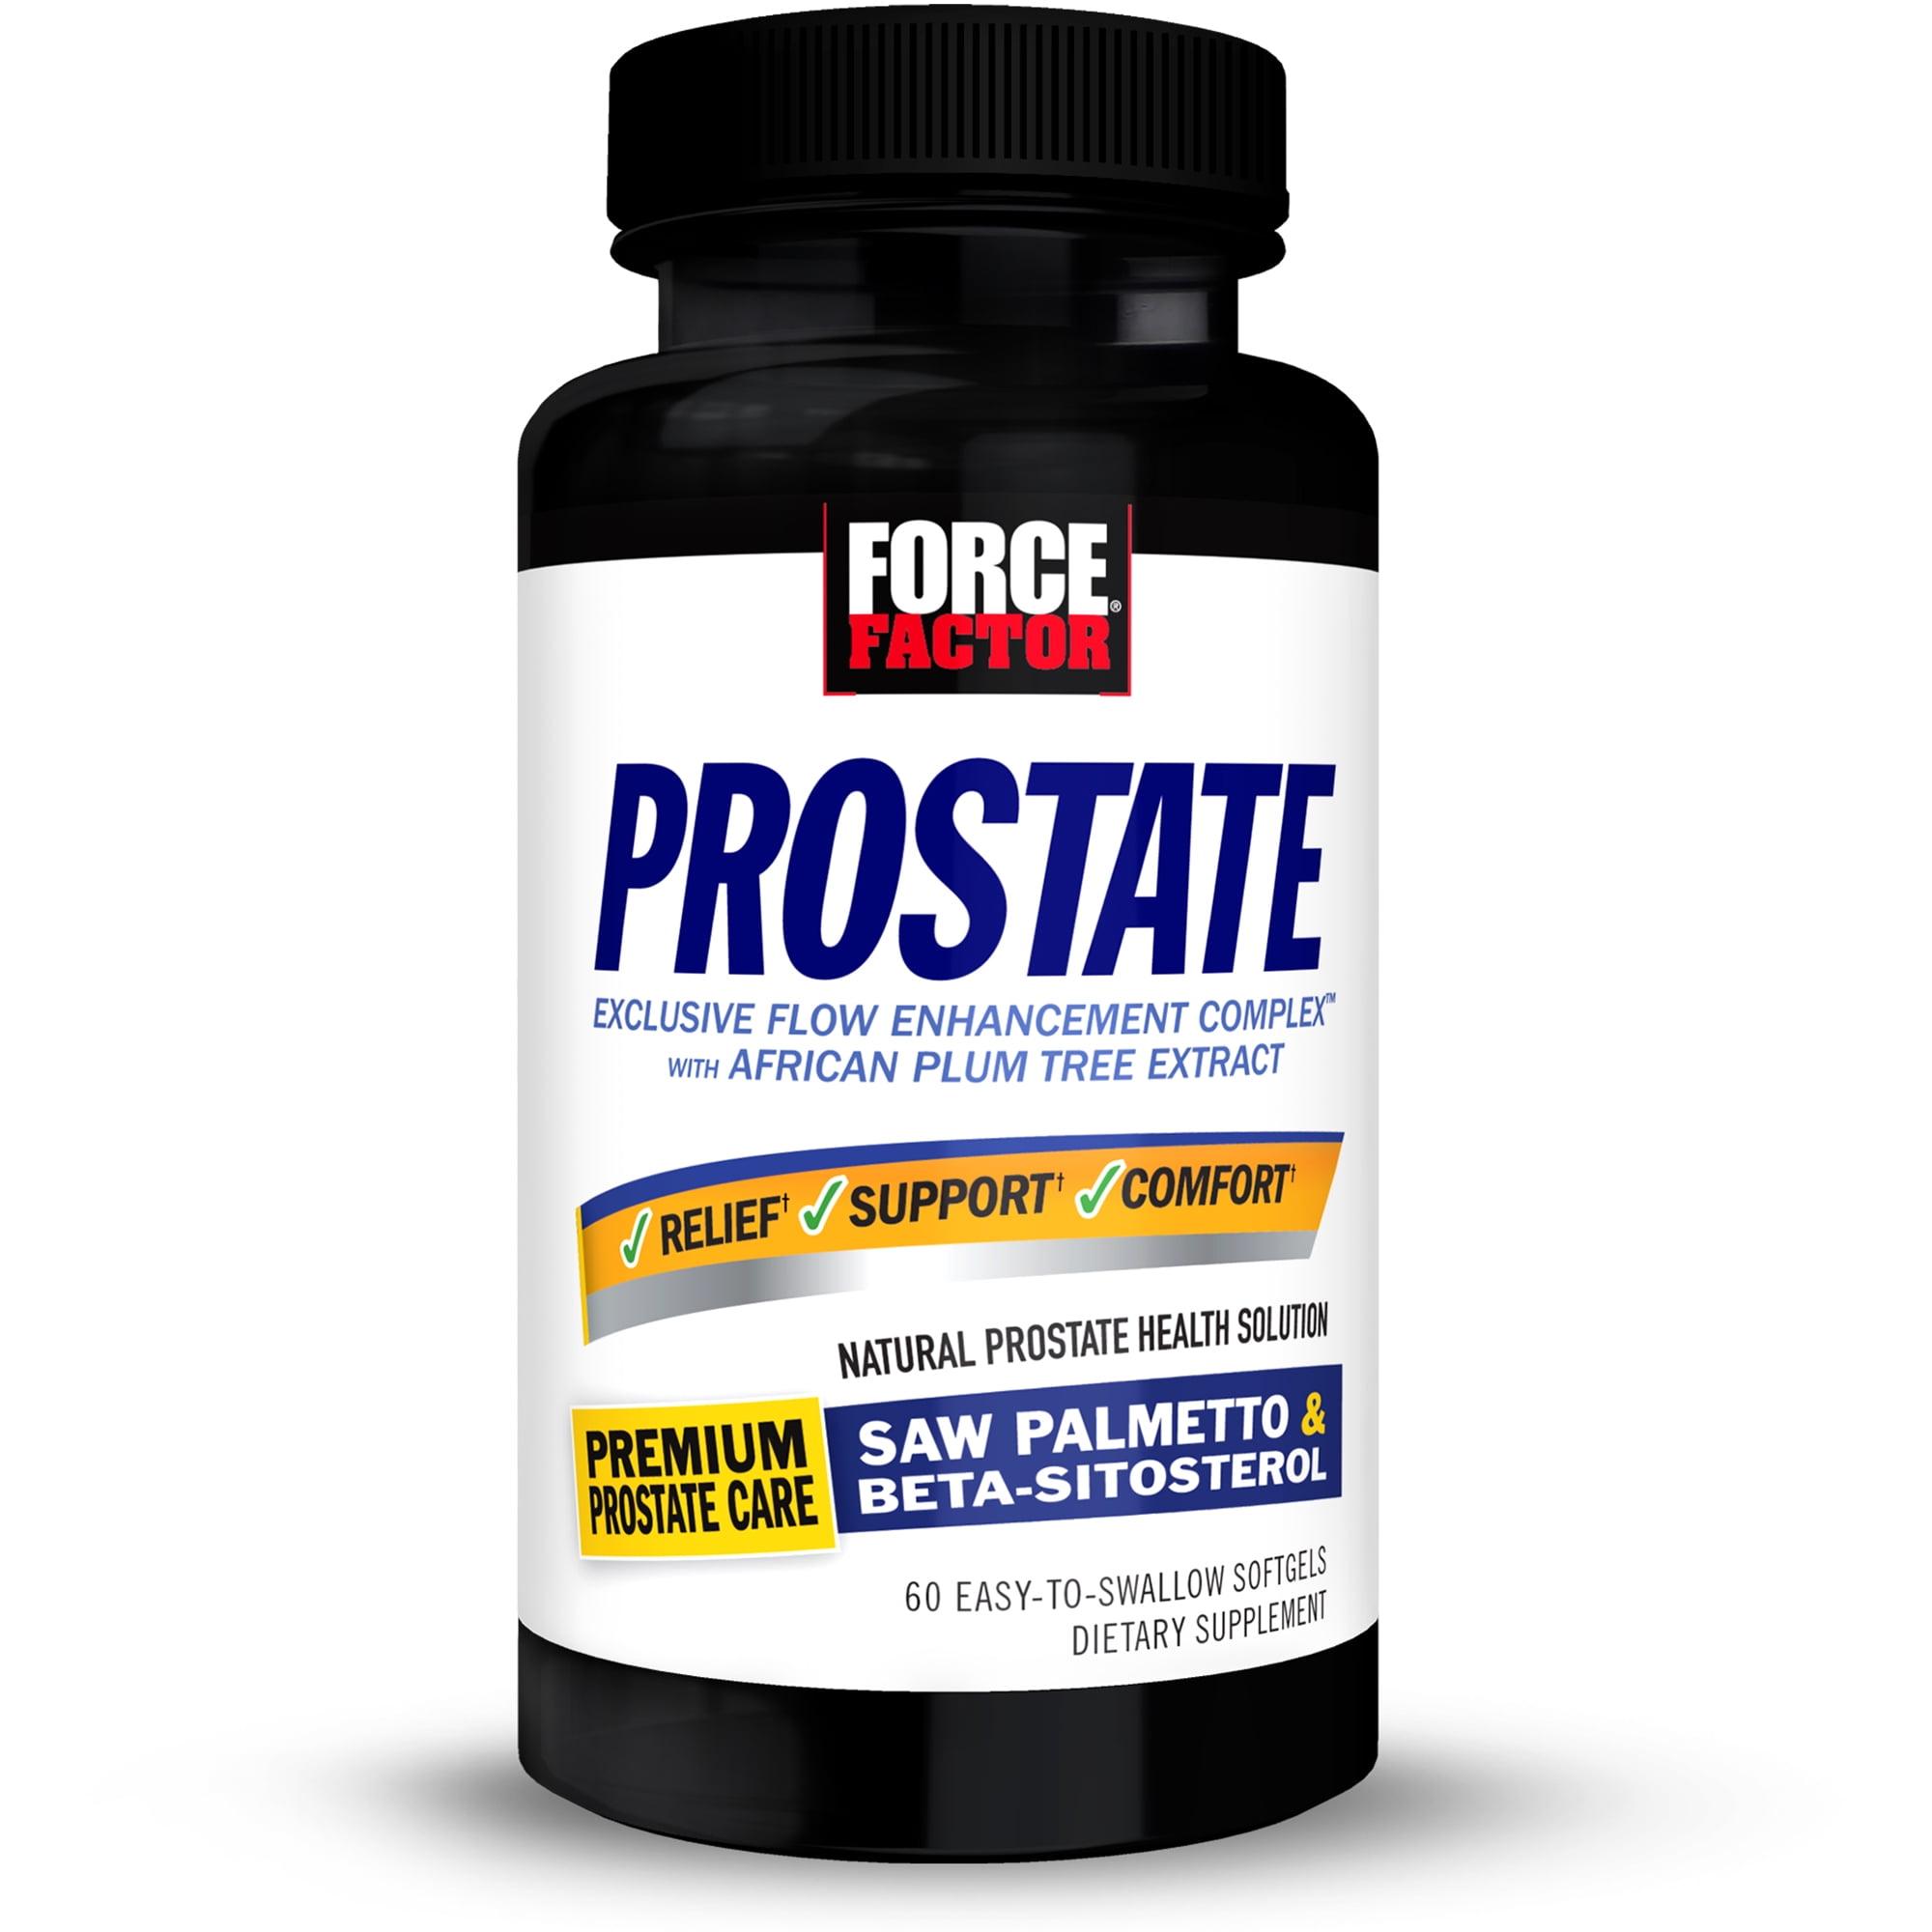 Suprax forum prostata